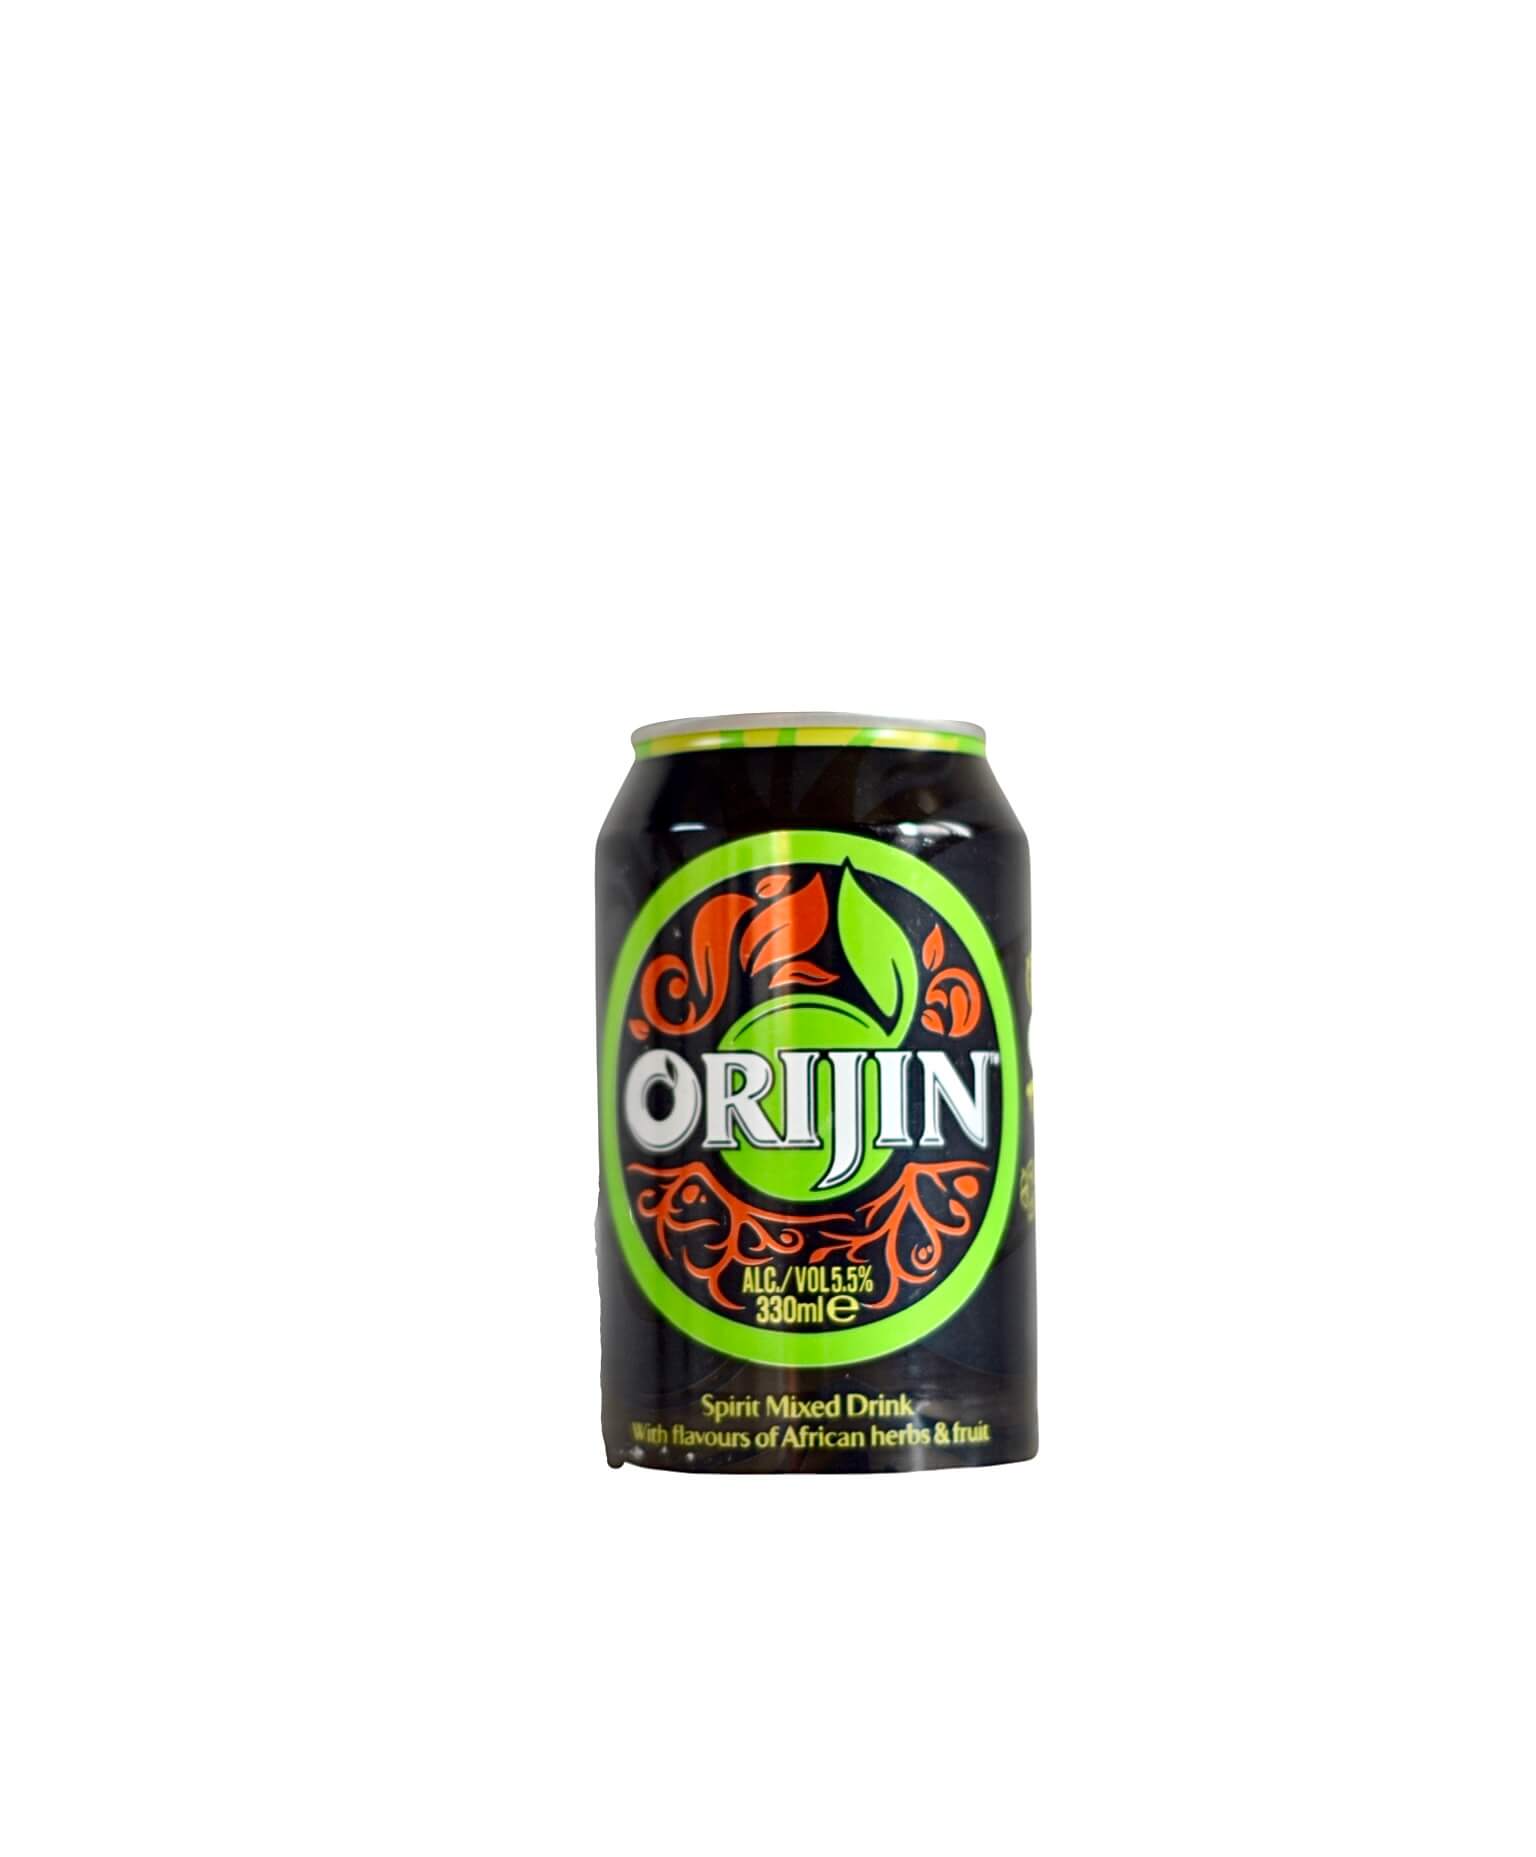 A can of Orijin